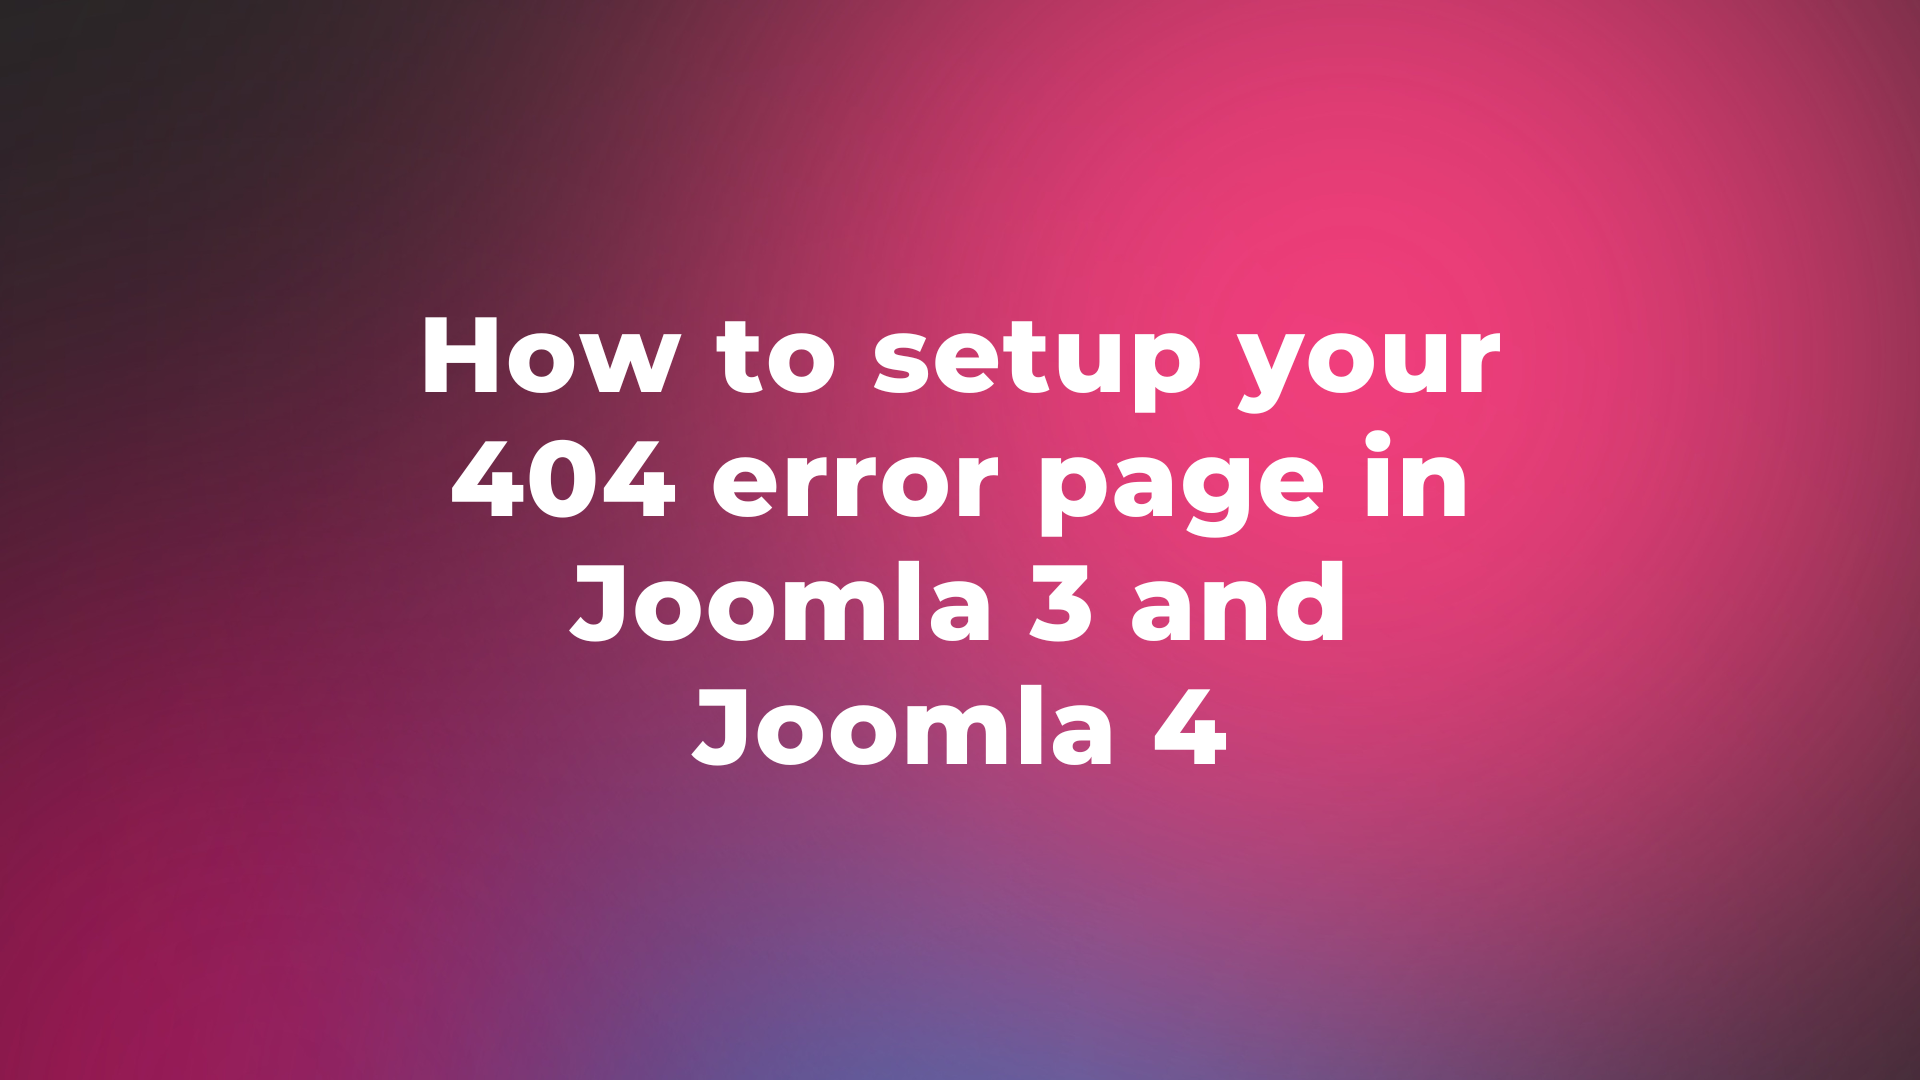 Joomla News: How to setup your 404 error page in Joomla 3 and Joomla 4